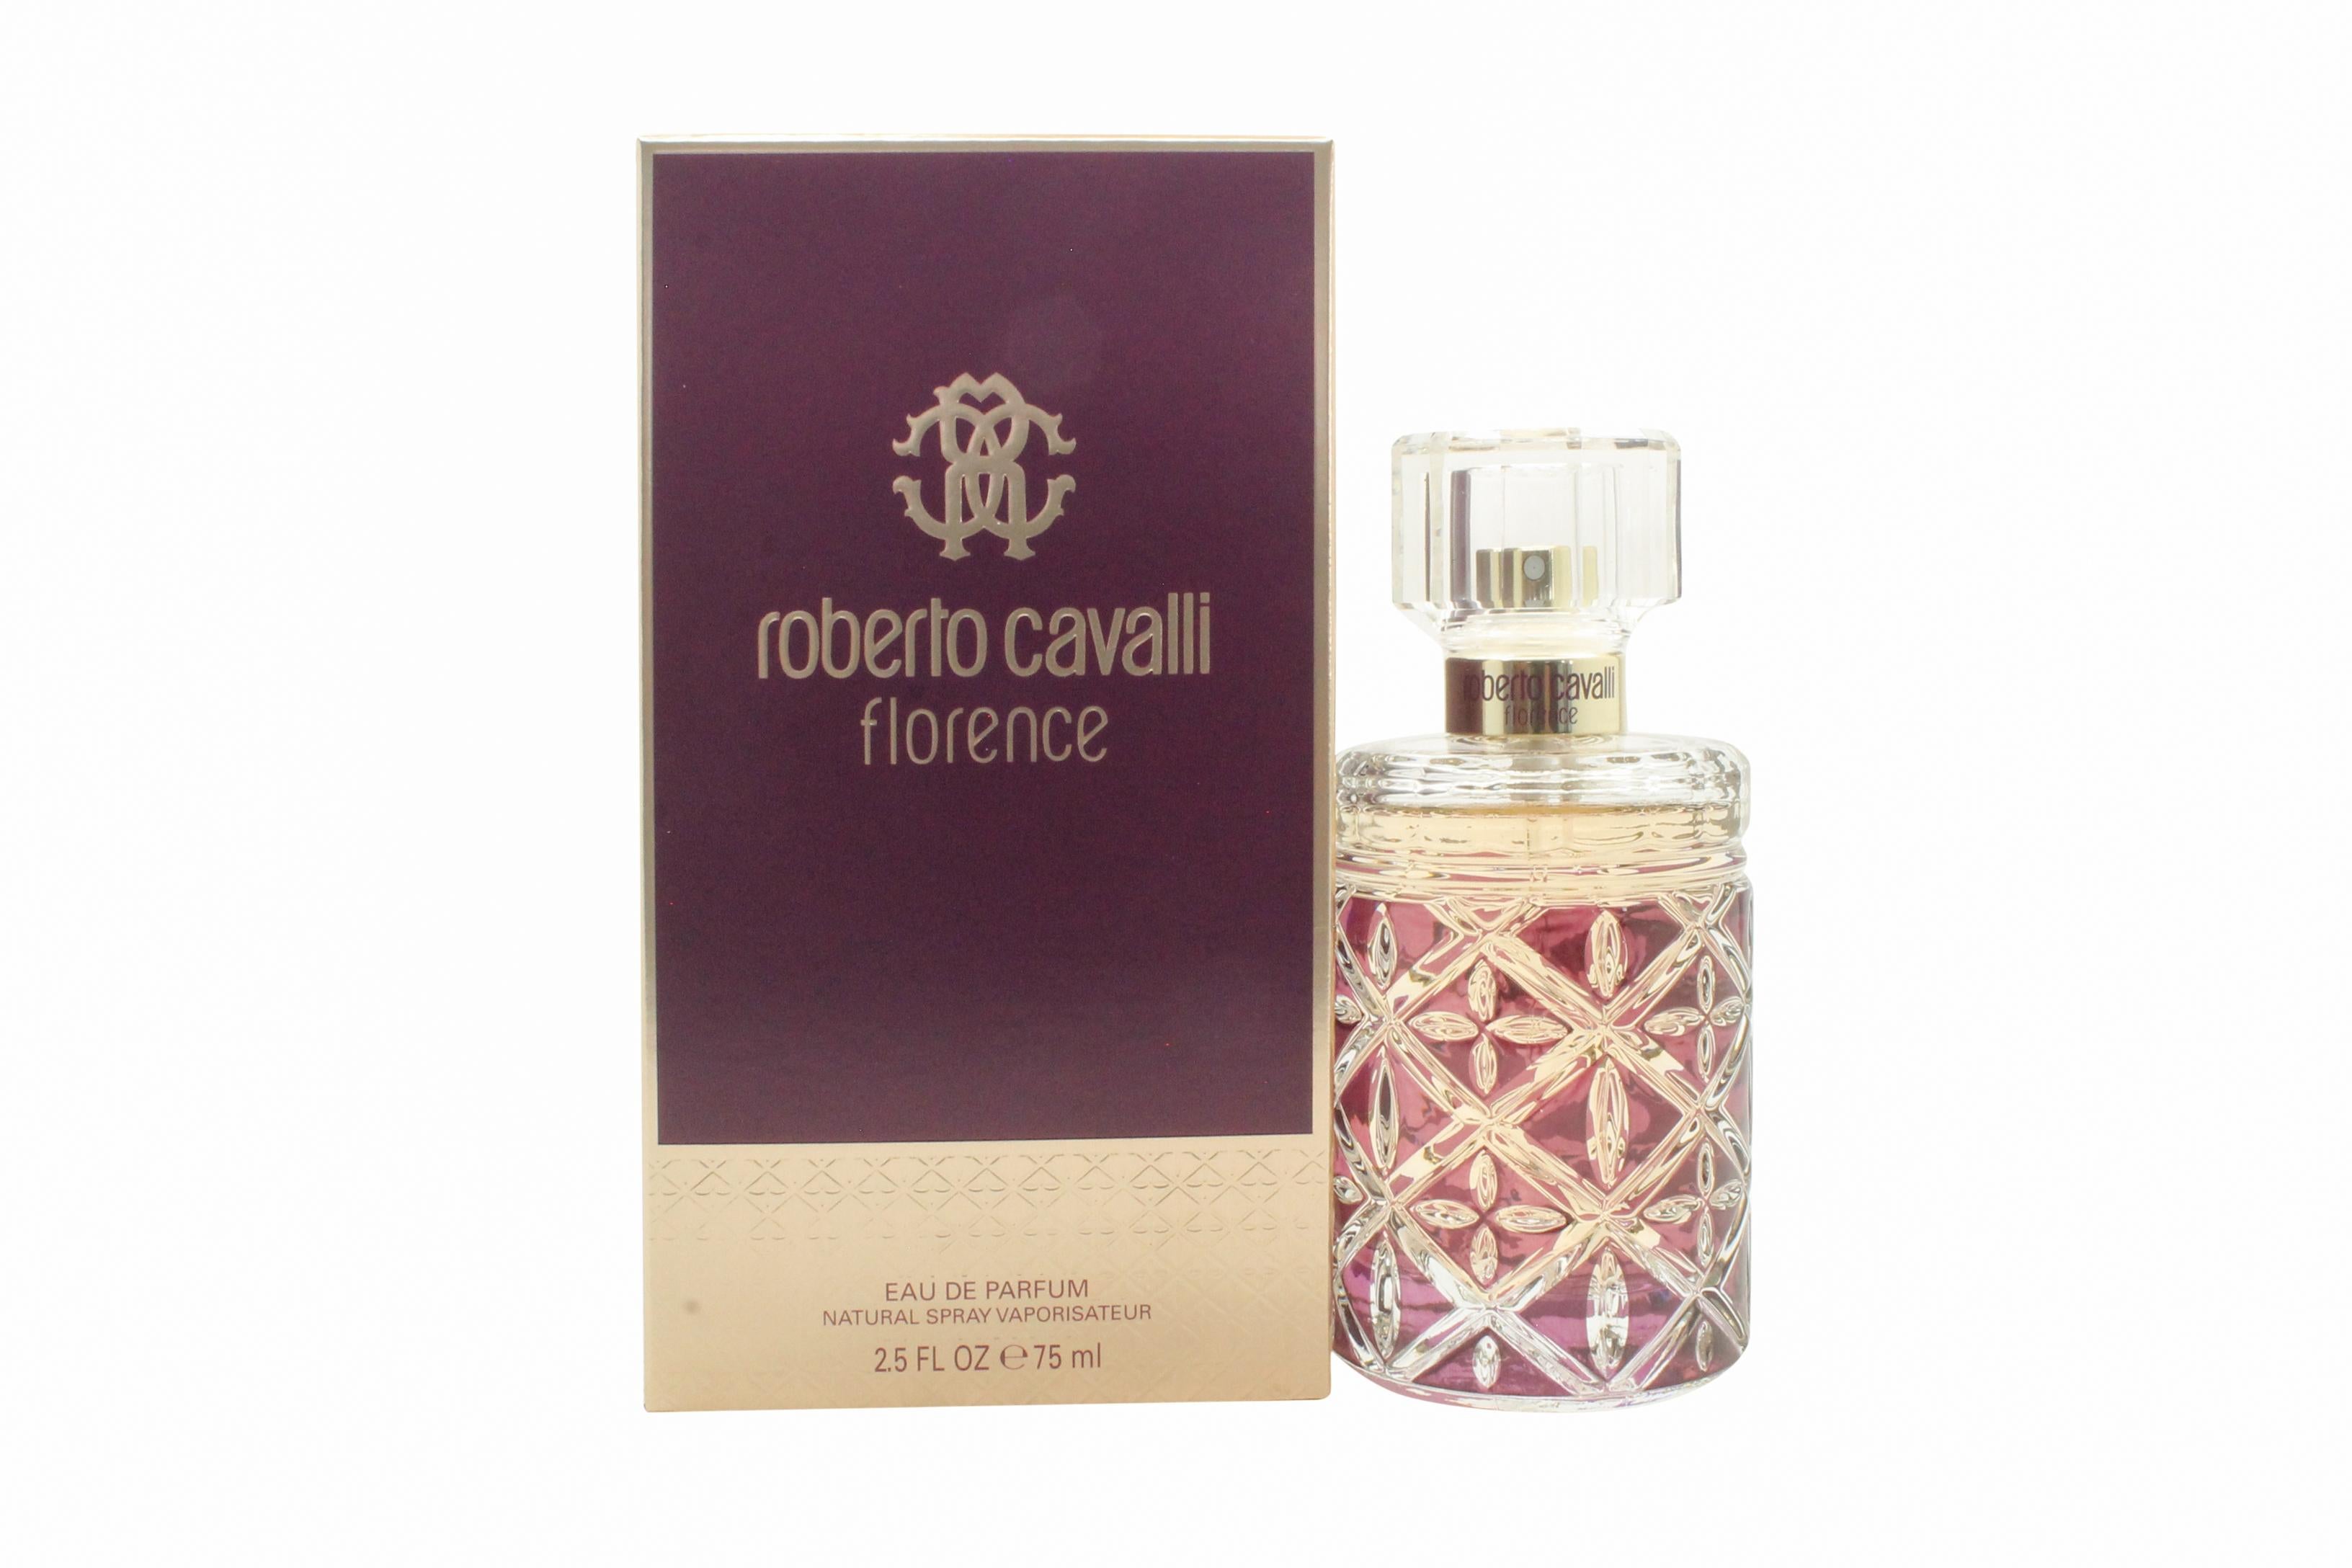 View Roberto Cavalli Florence Eau de Parfum 75ml Spray information